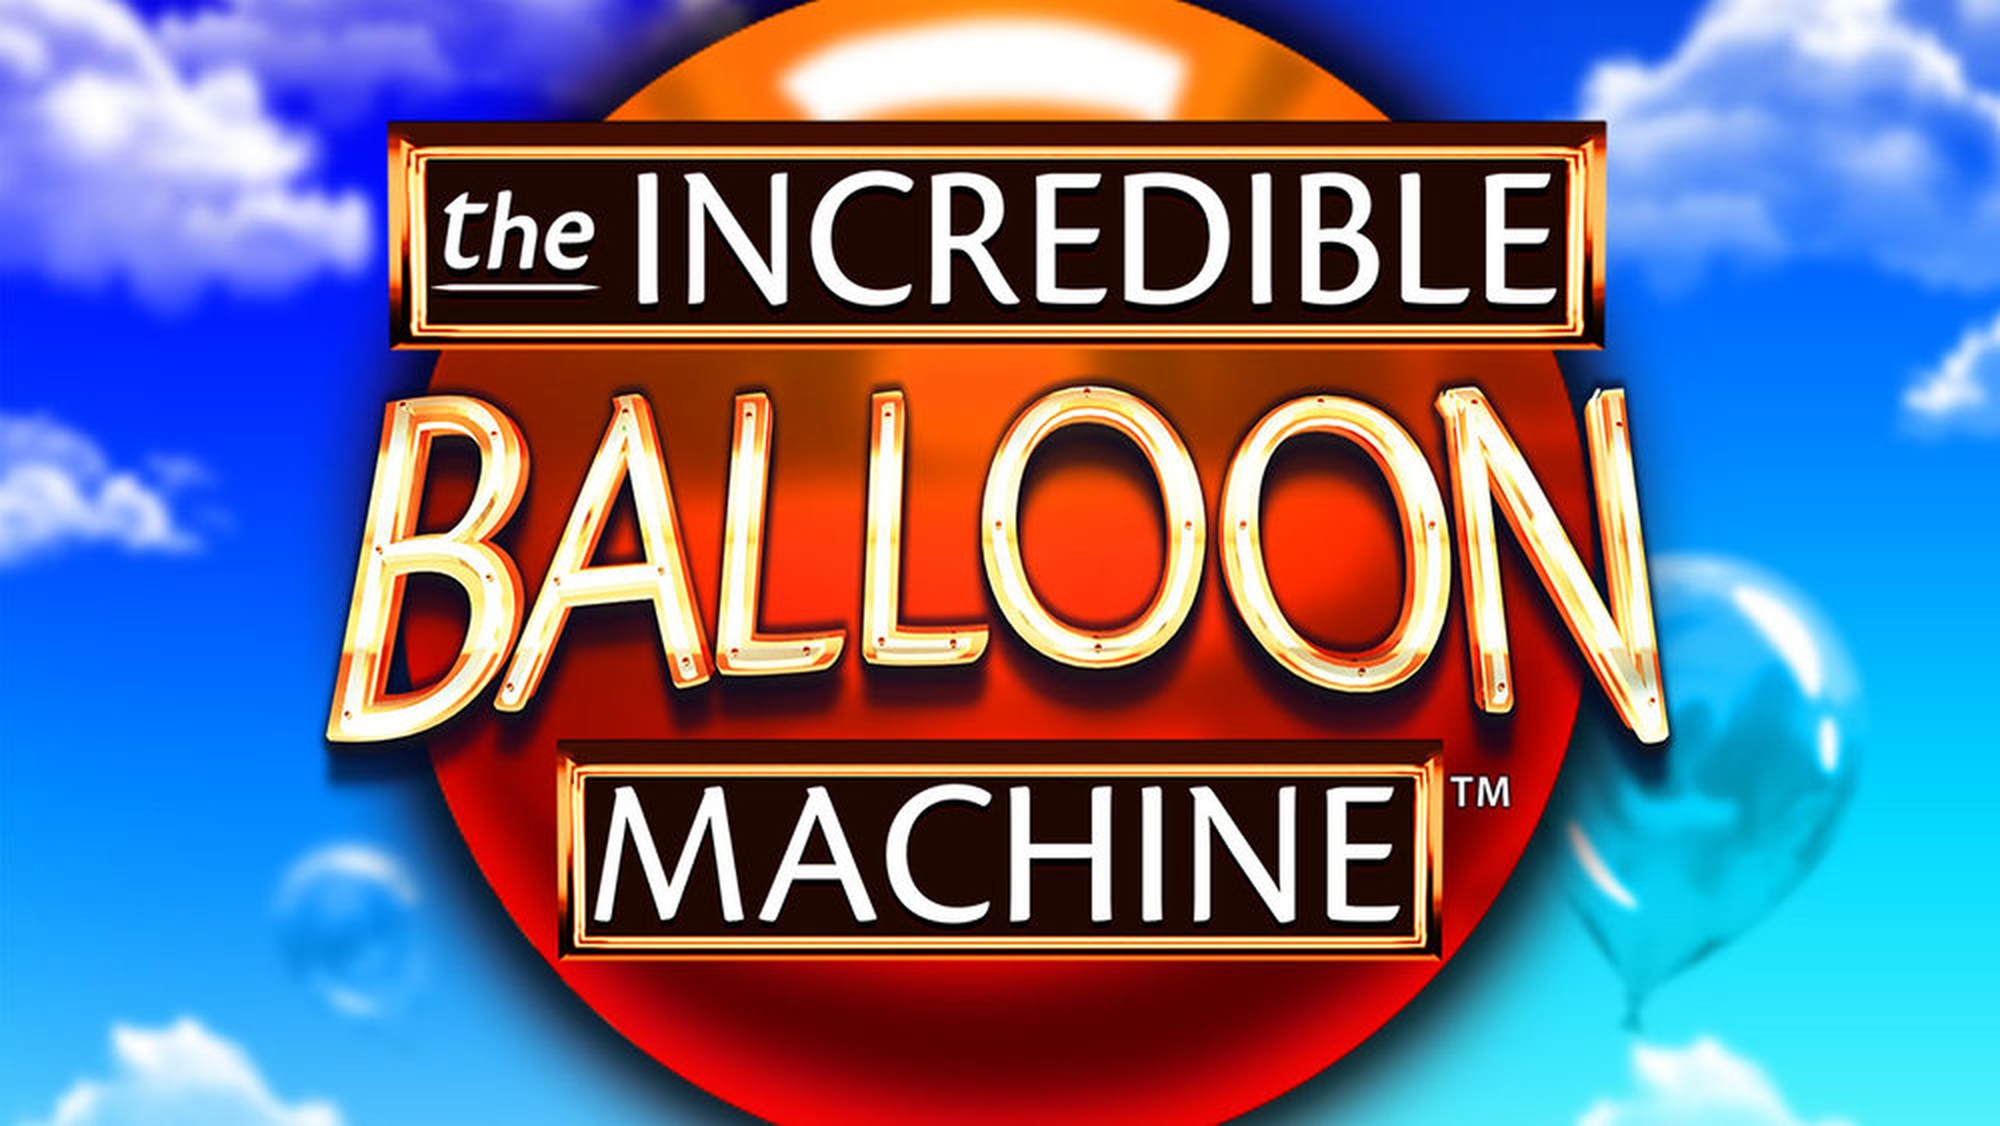 The Incredible Balloon Machine demo